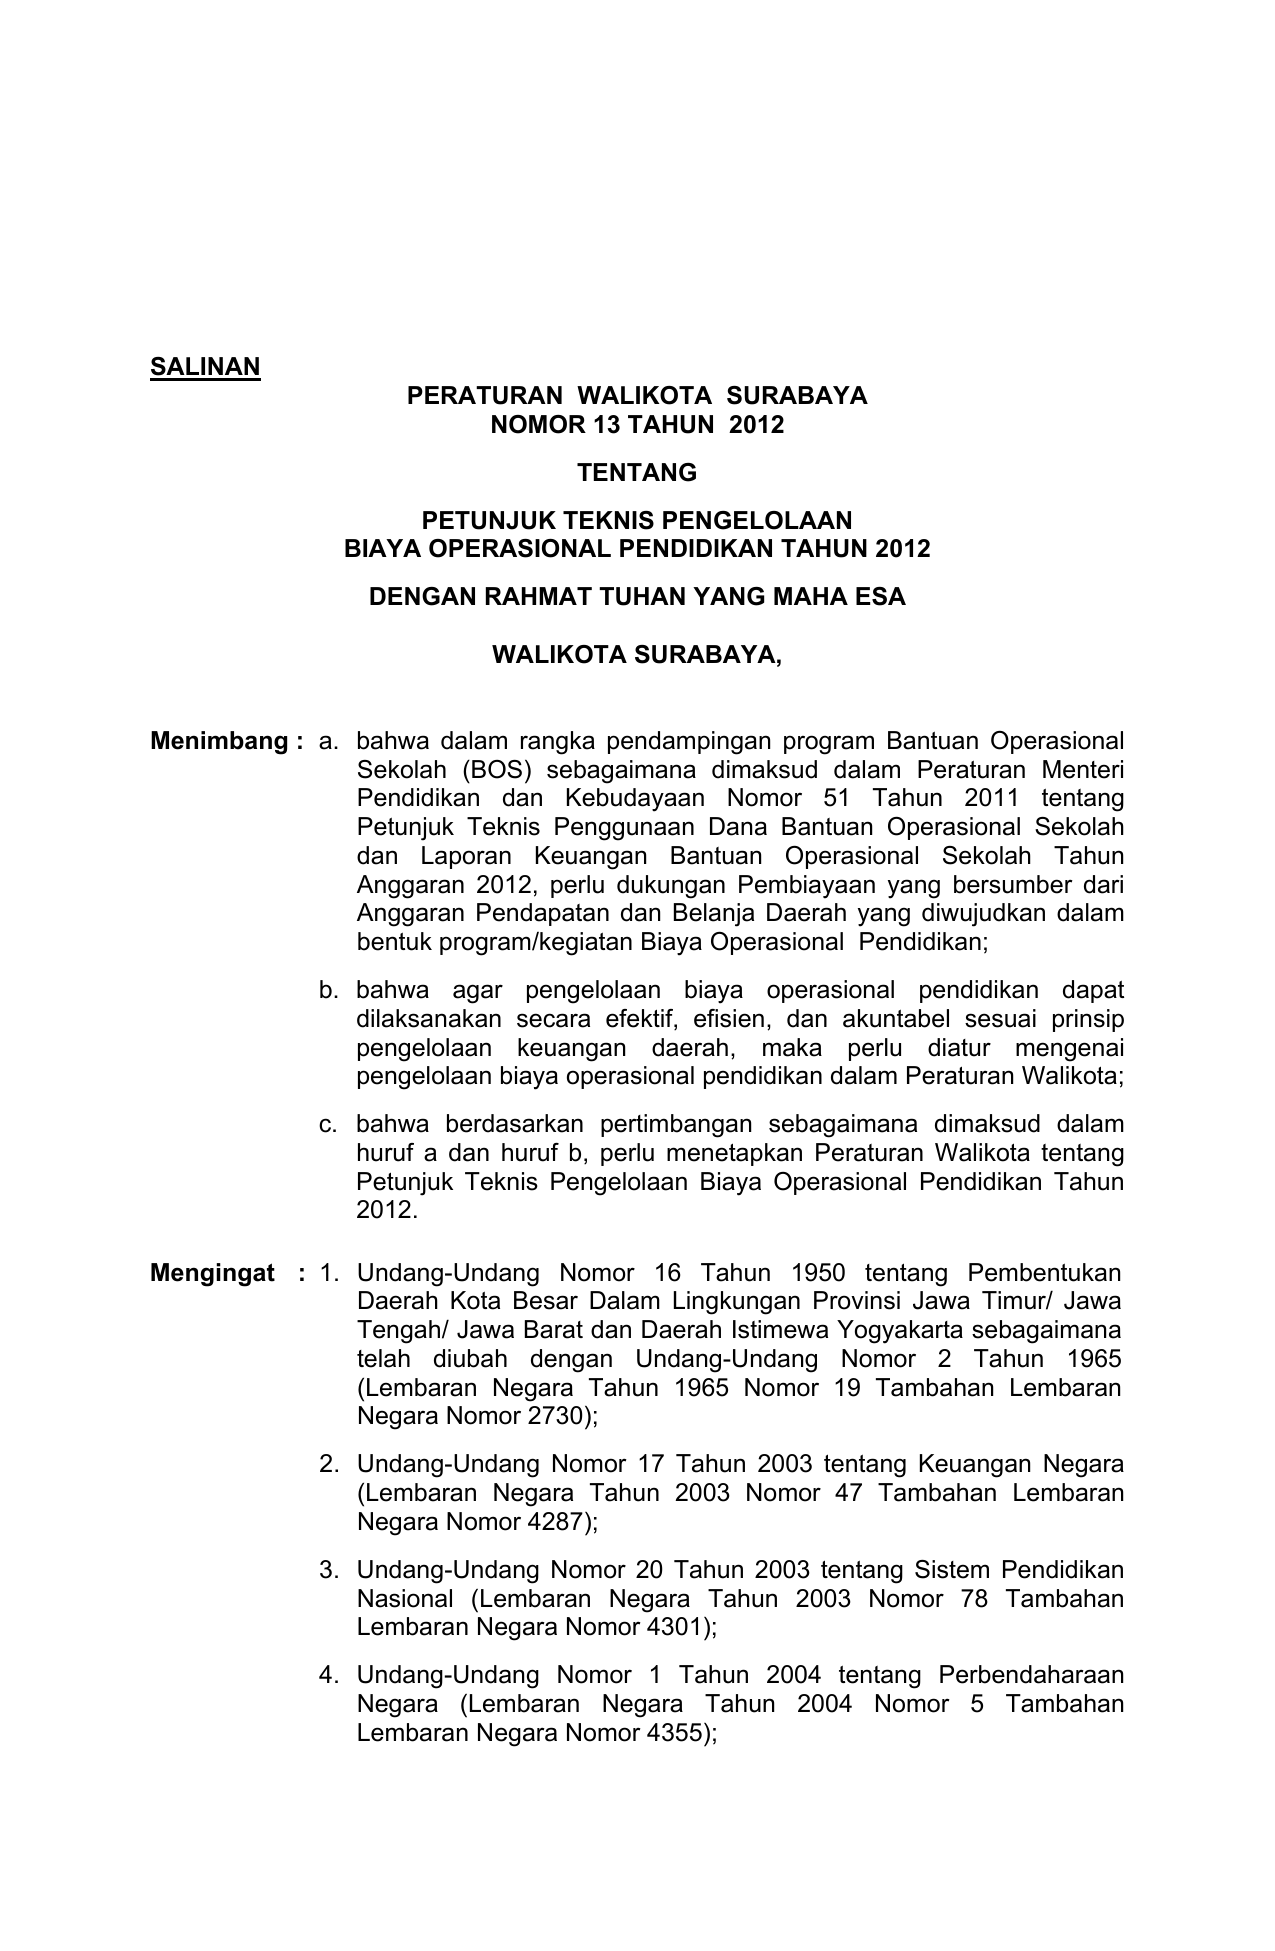 Peraturan Walikota Surabaya